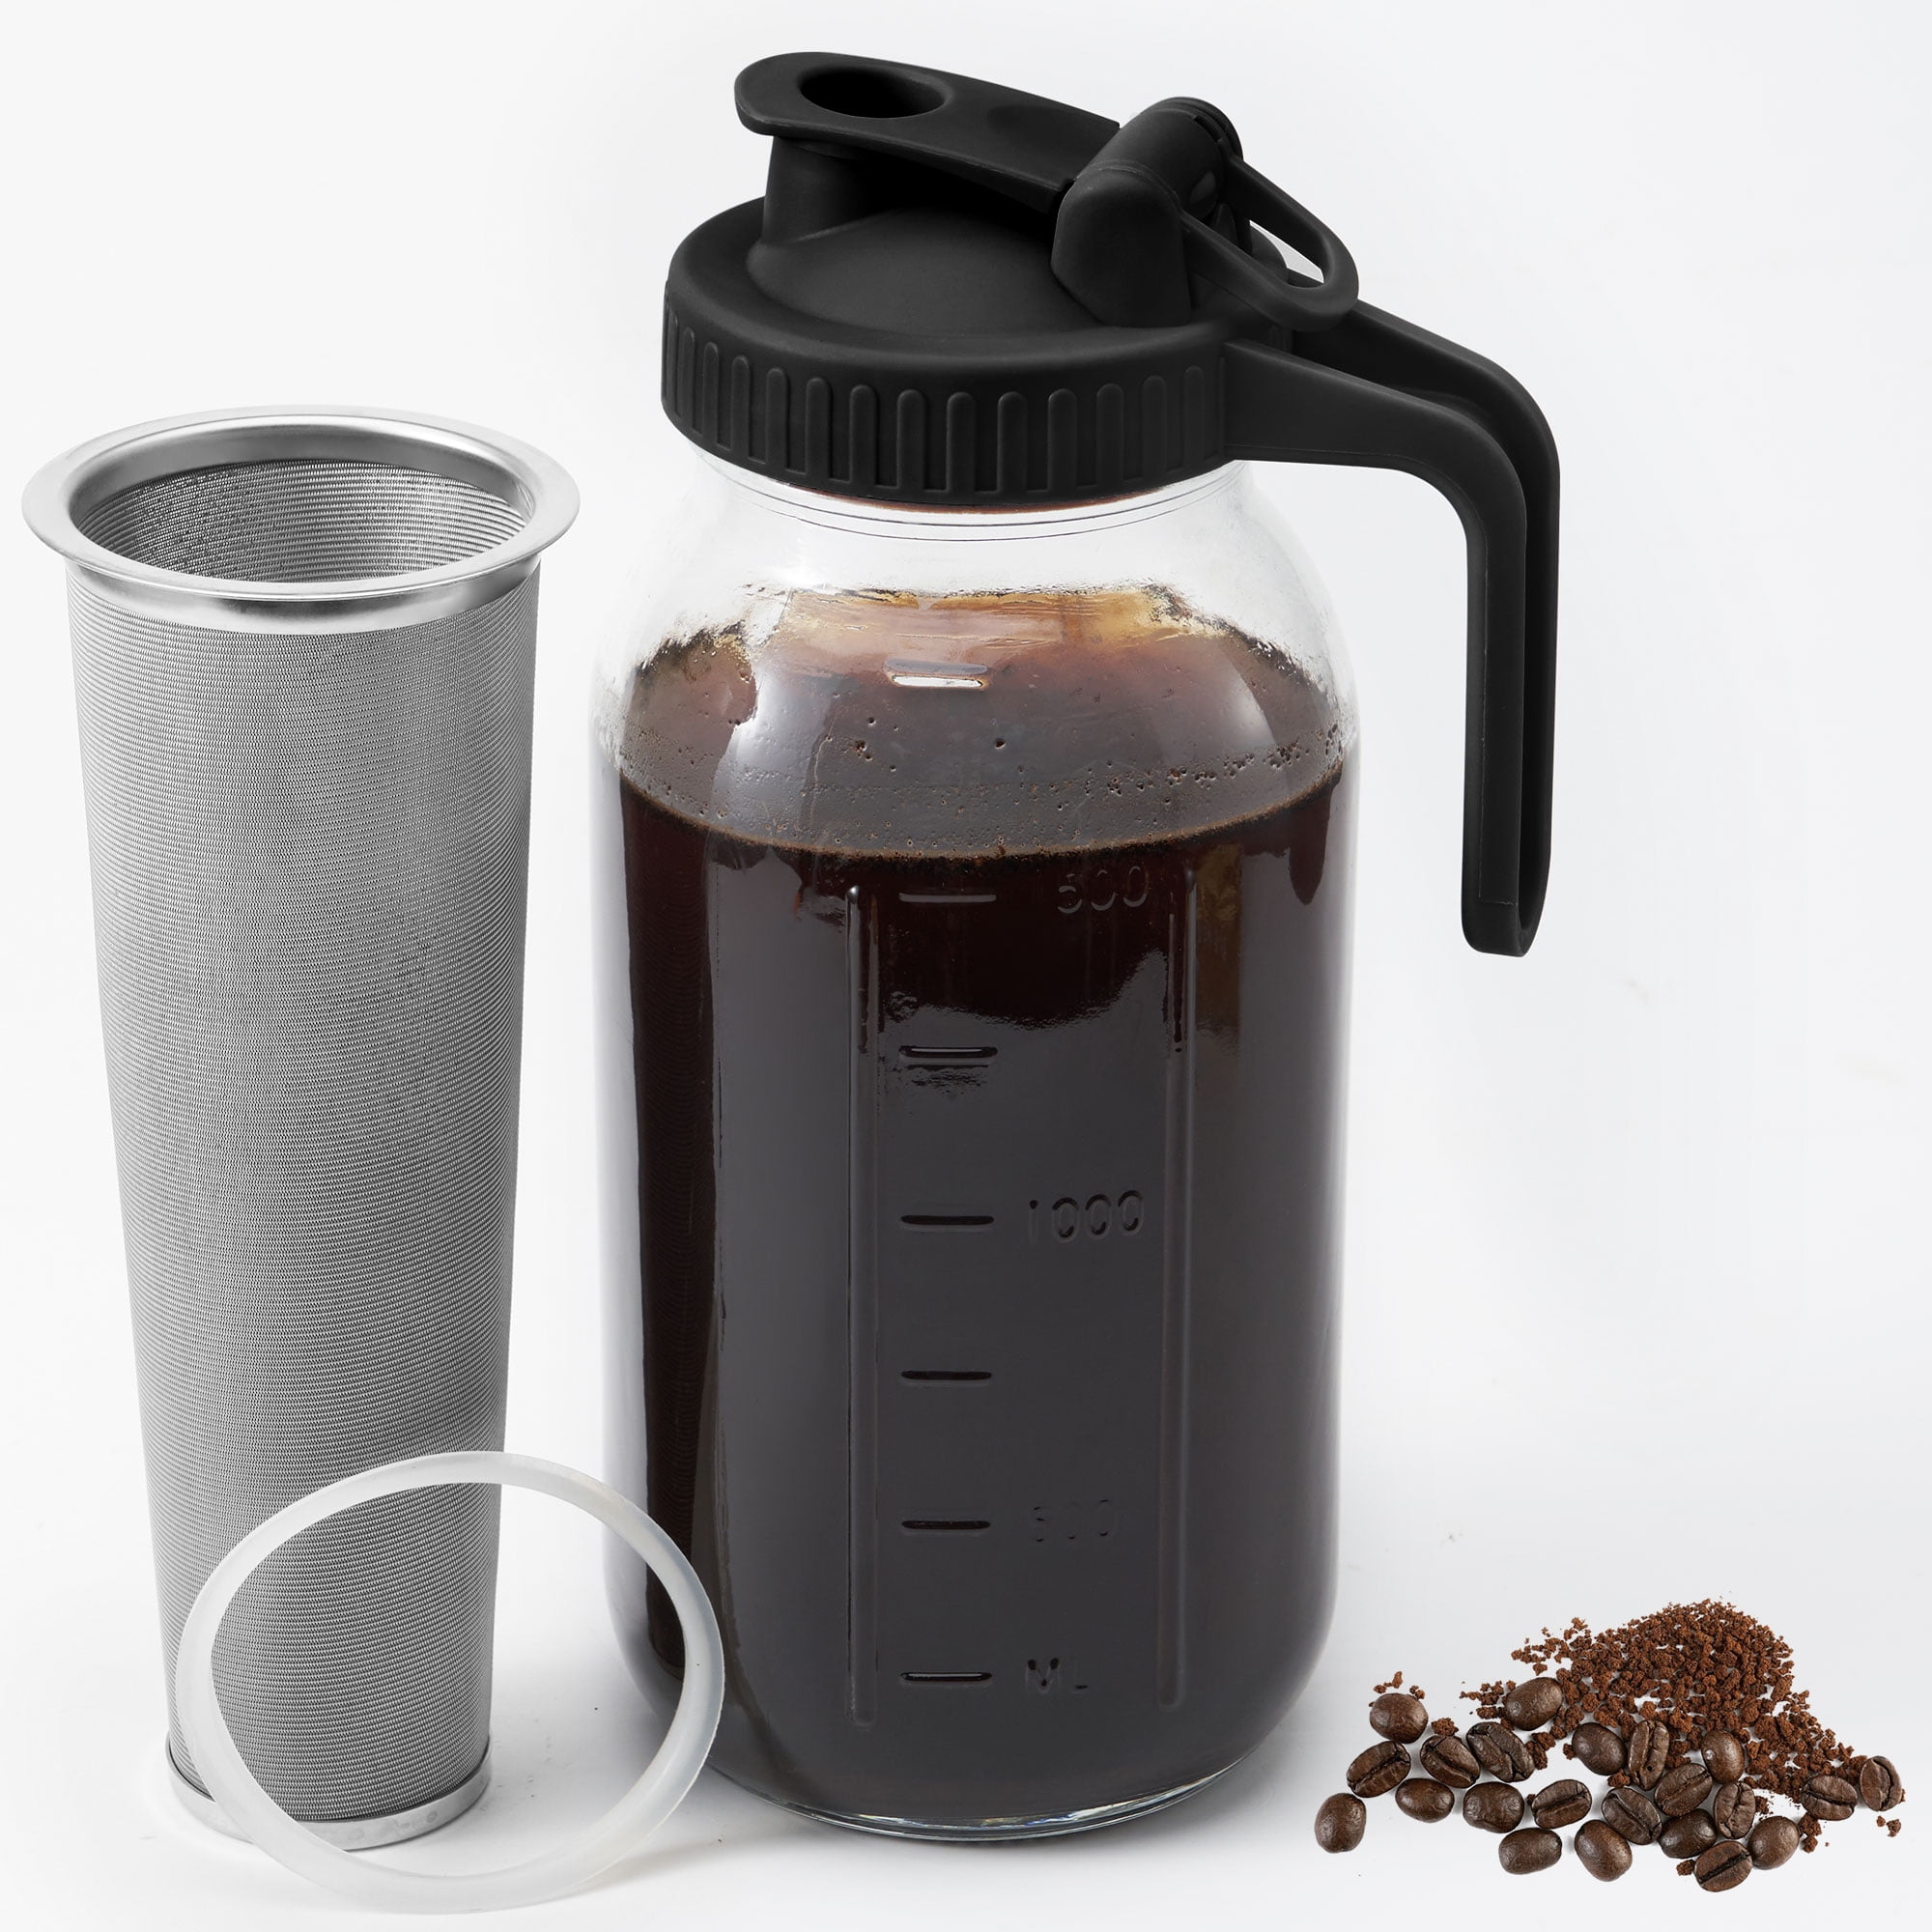 Asobu Coldbrew Portable Cold Brew Coffee Maker With a Vacuum